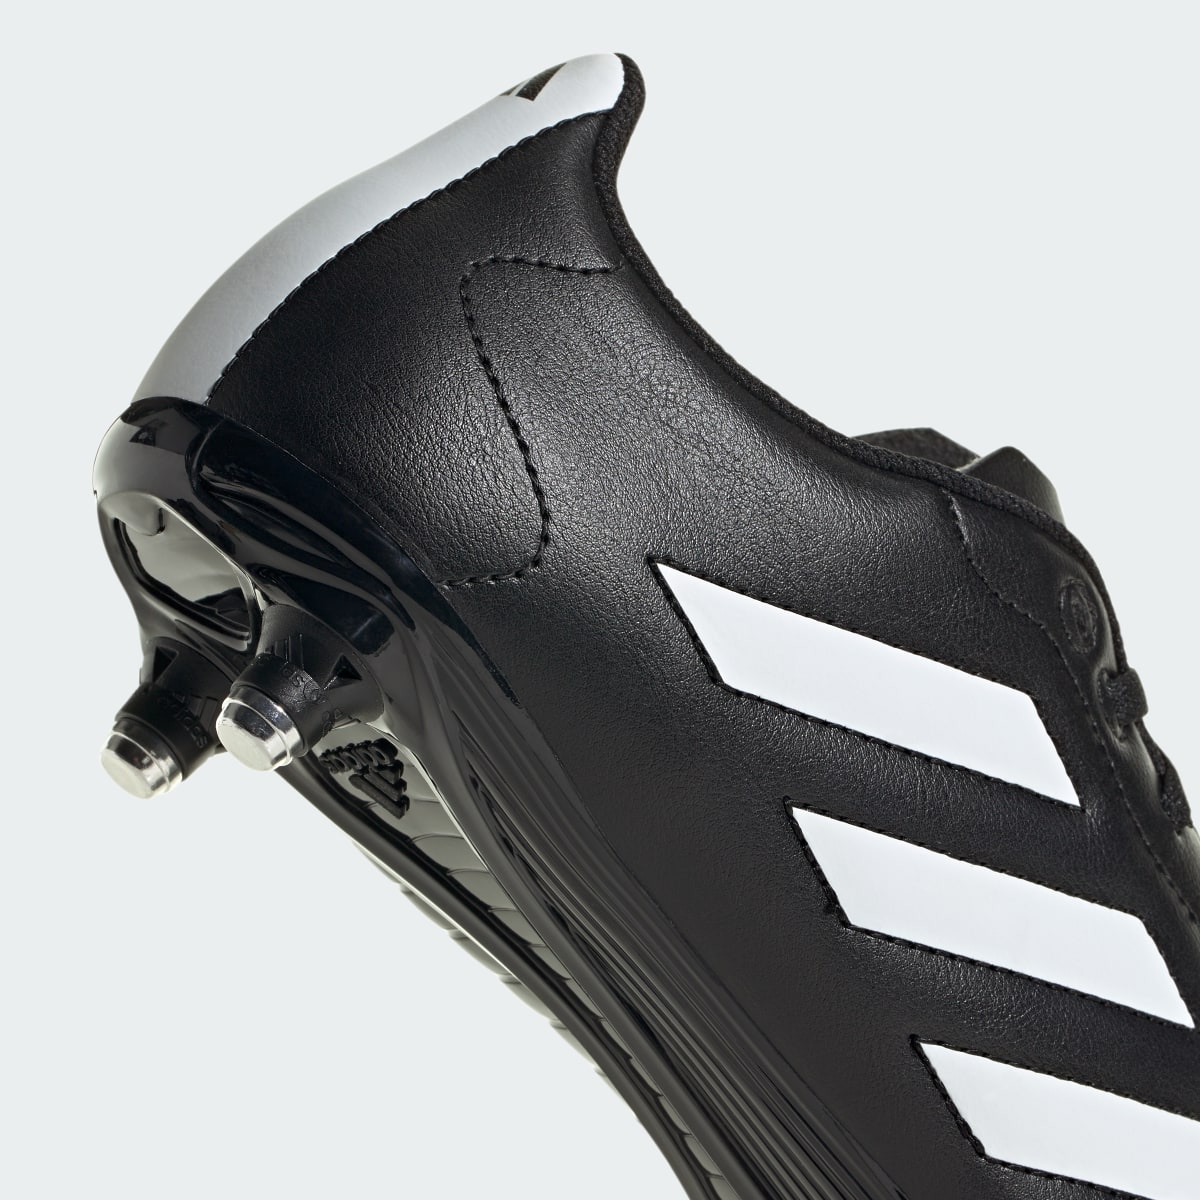 Adidas Goletto VIII Soft Ground Boots. 8